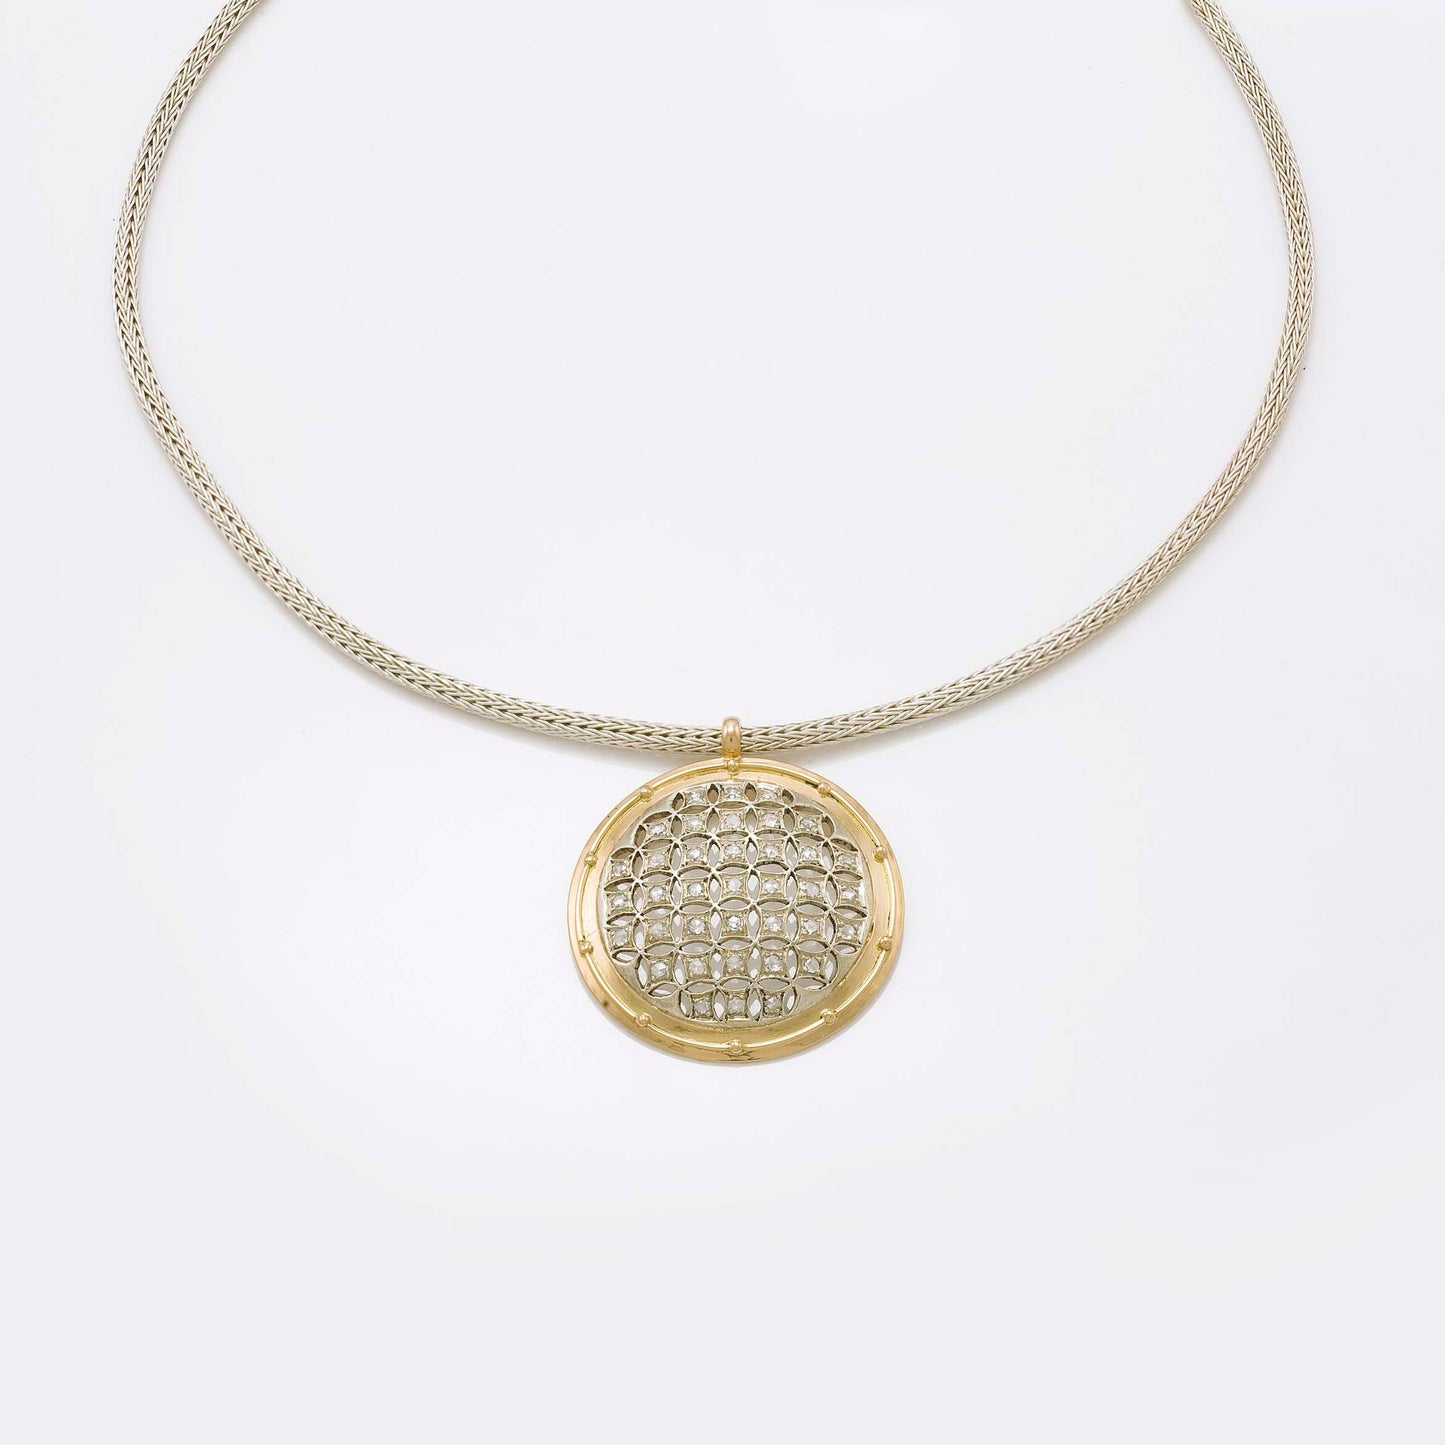 The Anika SiGo Silver Gold and Diamond Necklace by Rasvihar